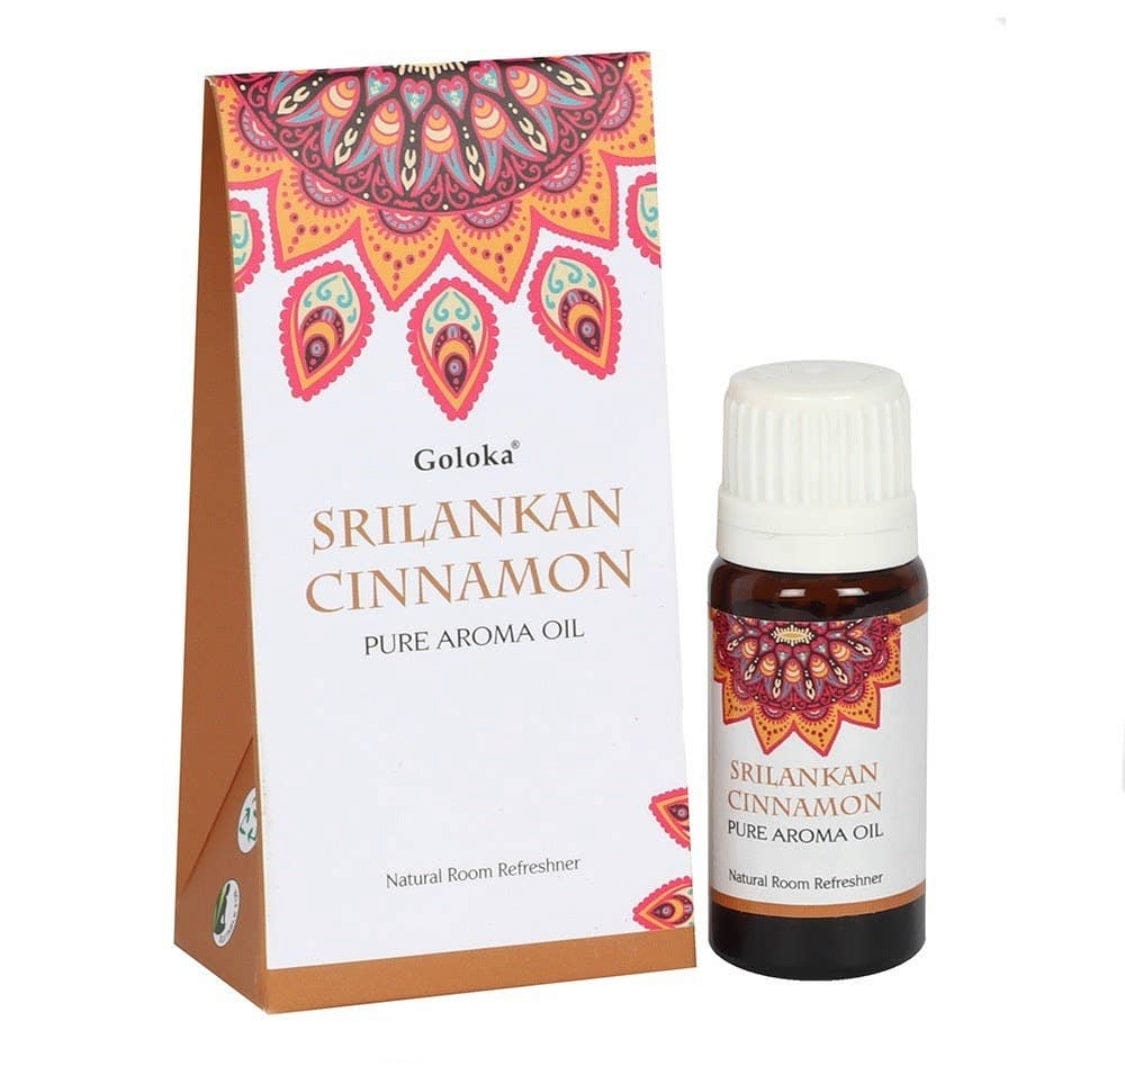 Sri Lankan Cinnamon Fragrance Oil